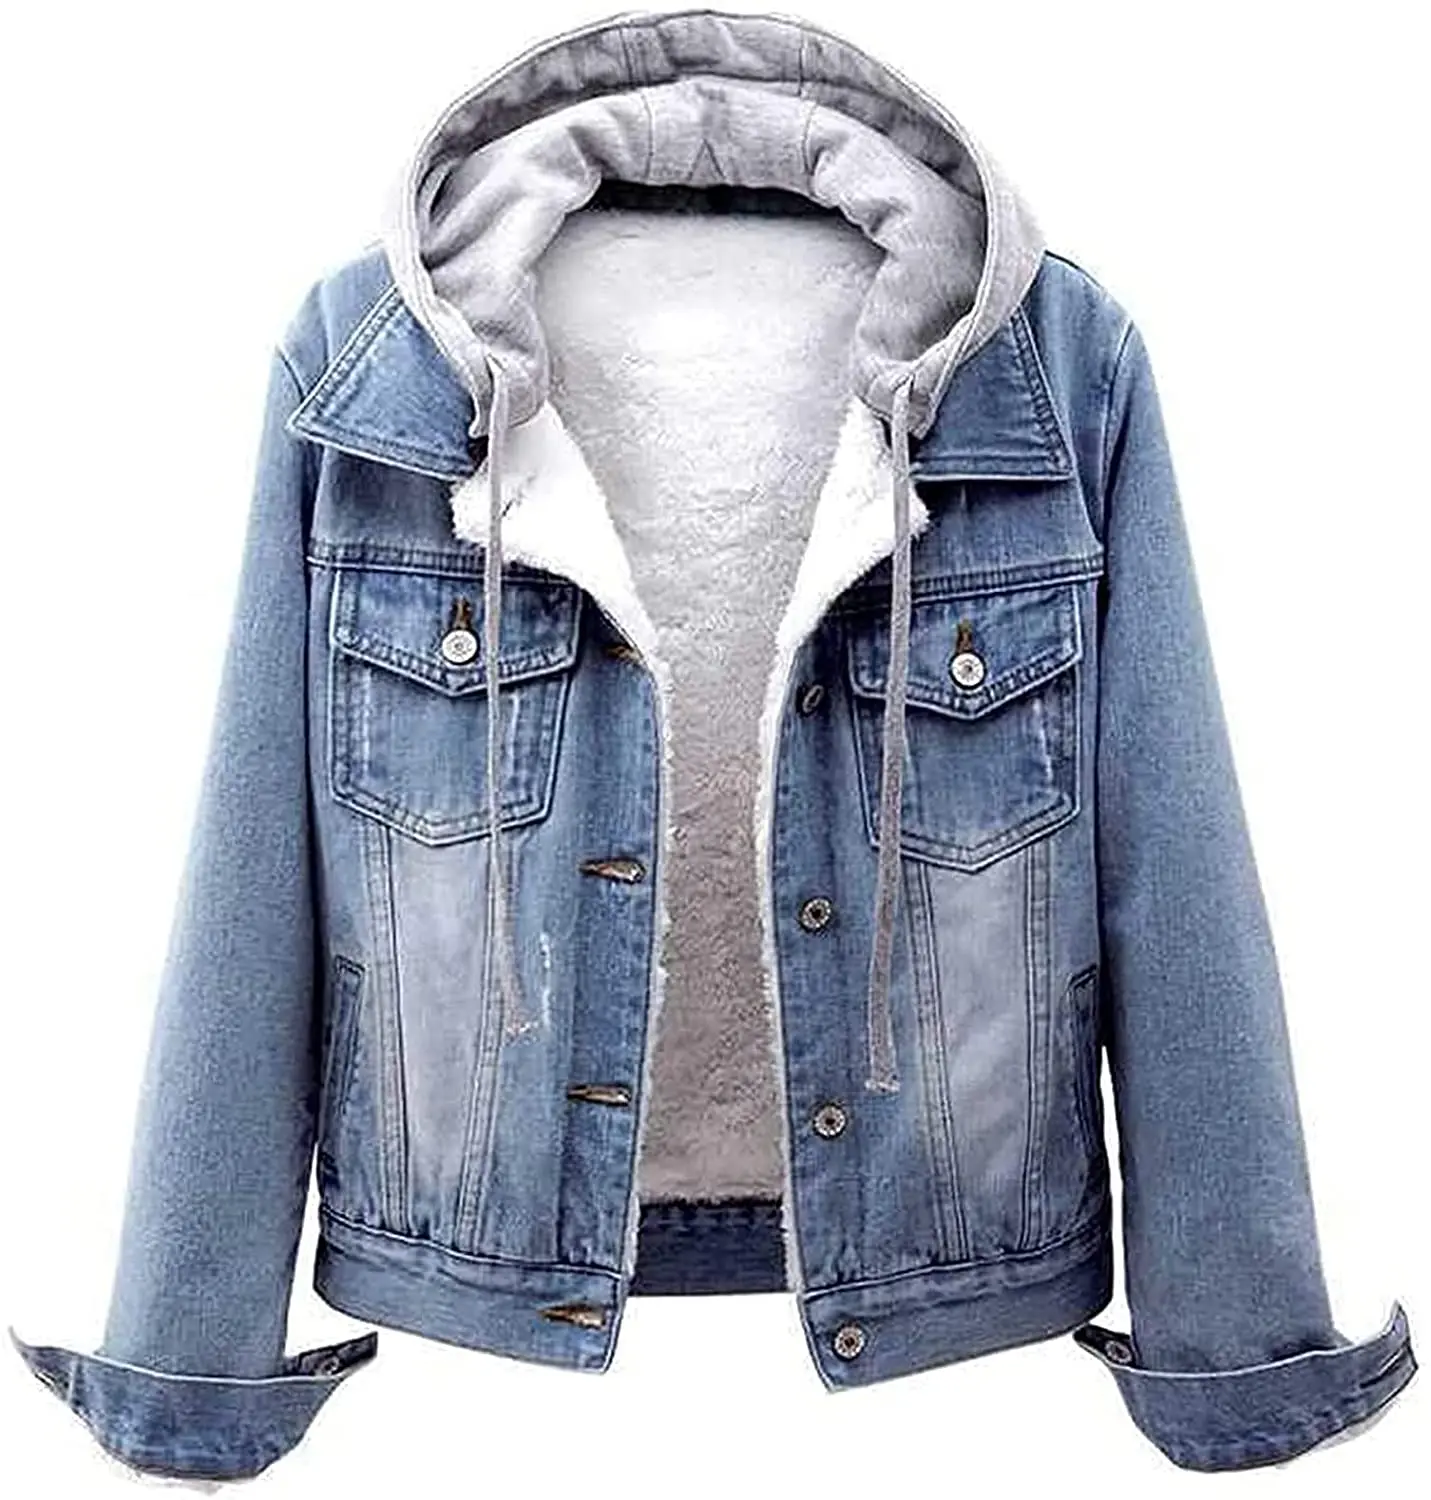 discount 73% Blue S Stradivarius light jacket WOMEN FASHION Jackets Light jacket Jean 